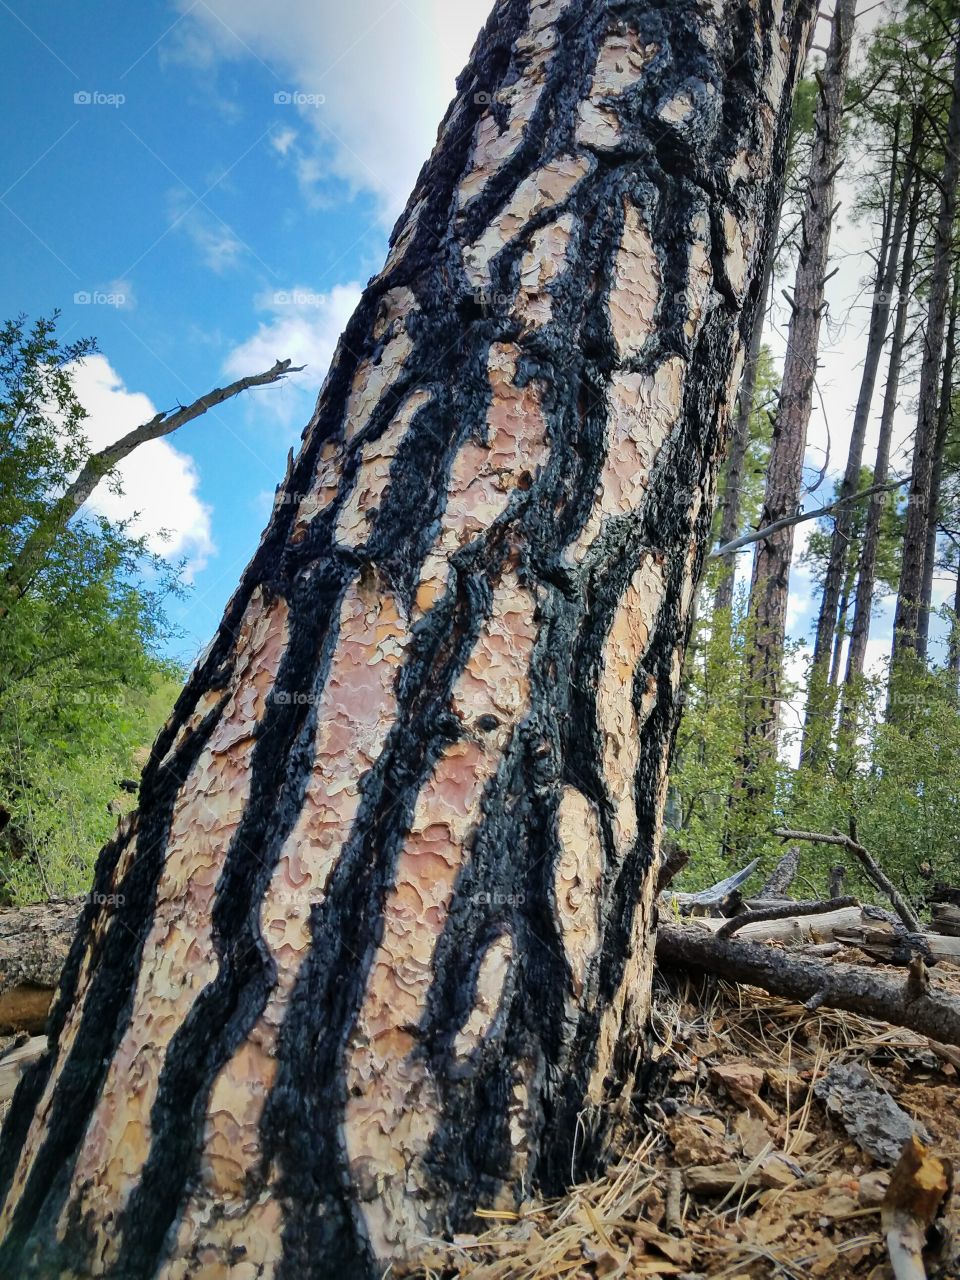 Zebra striped burn marks on pine trees